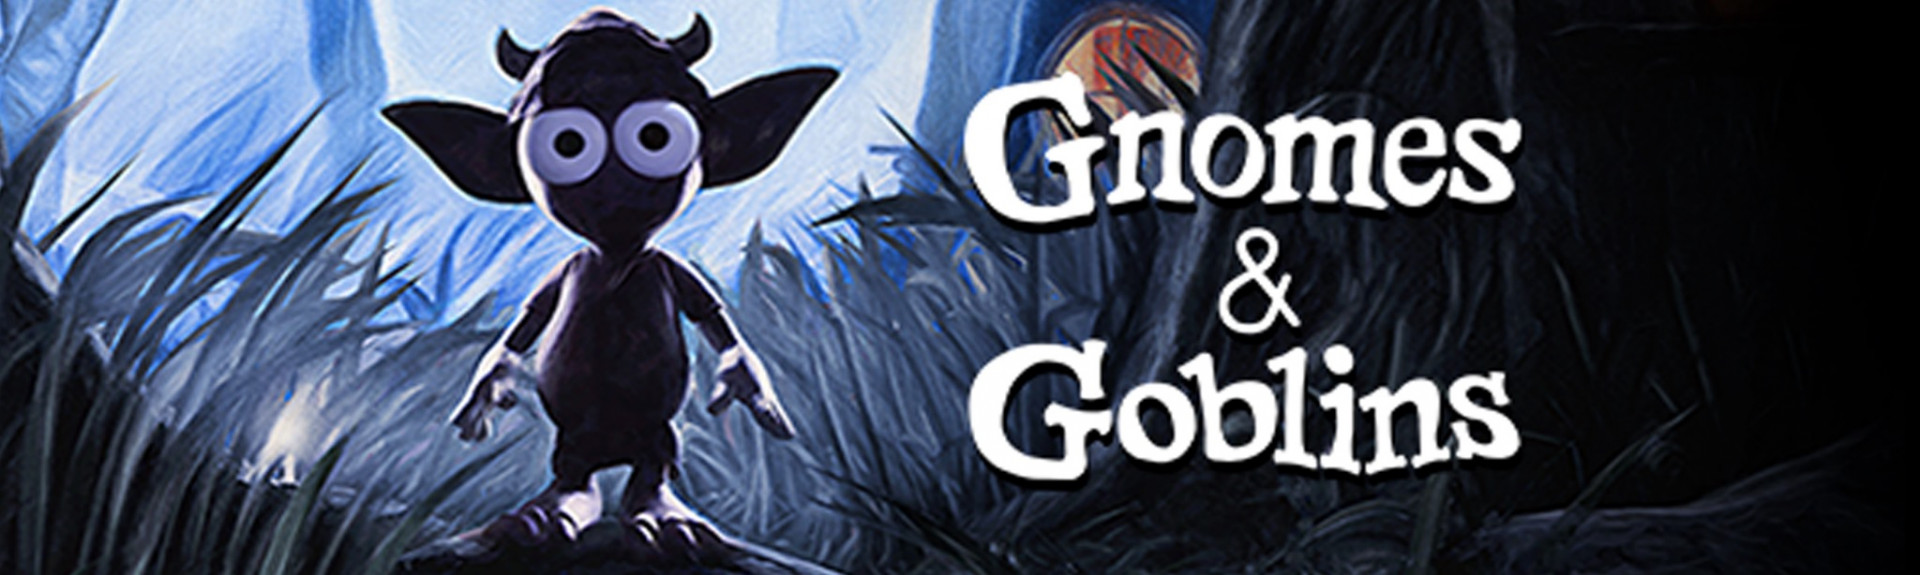 Gnomes & Goblins: ANÁLISIS